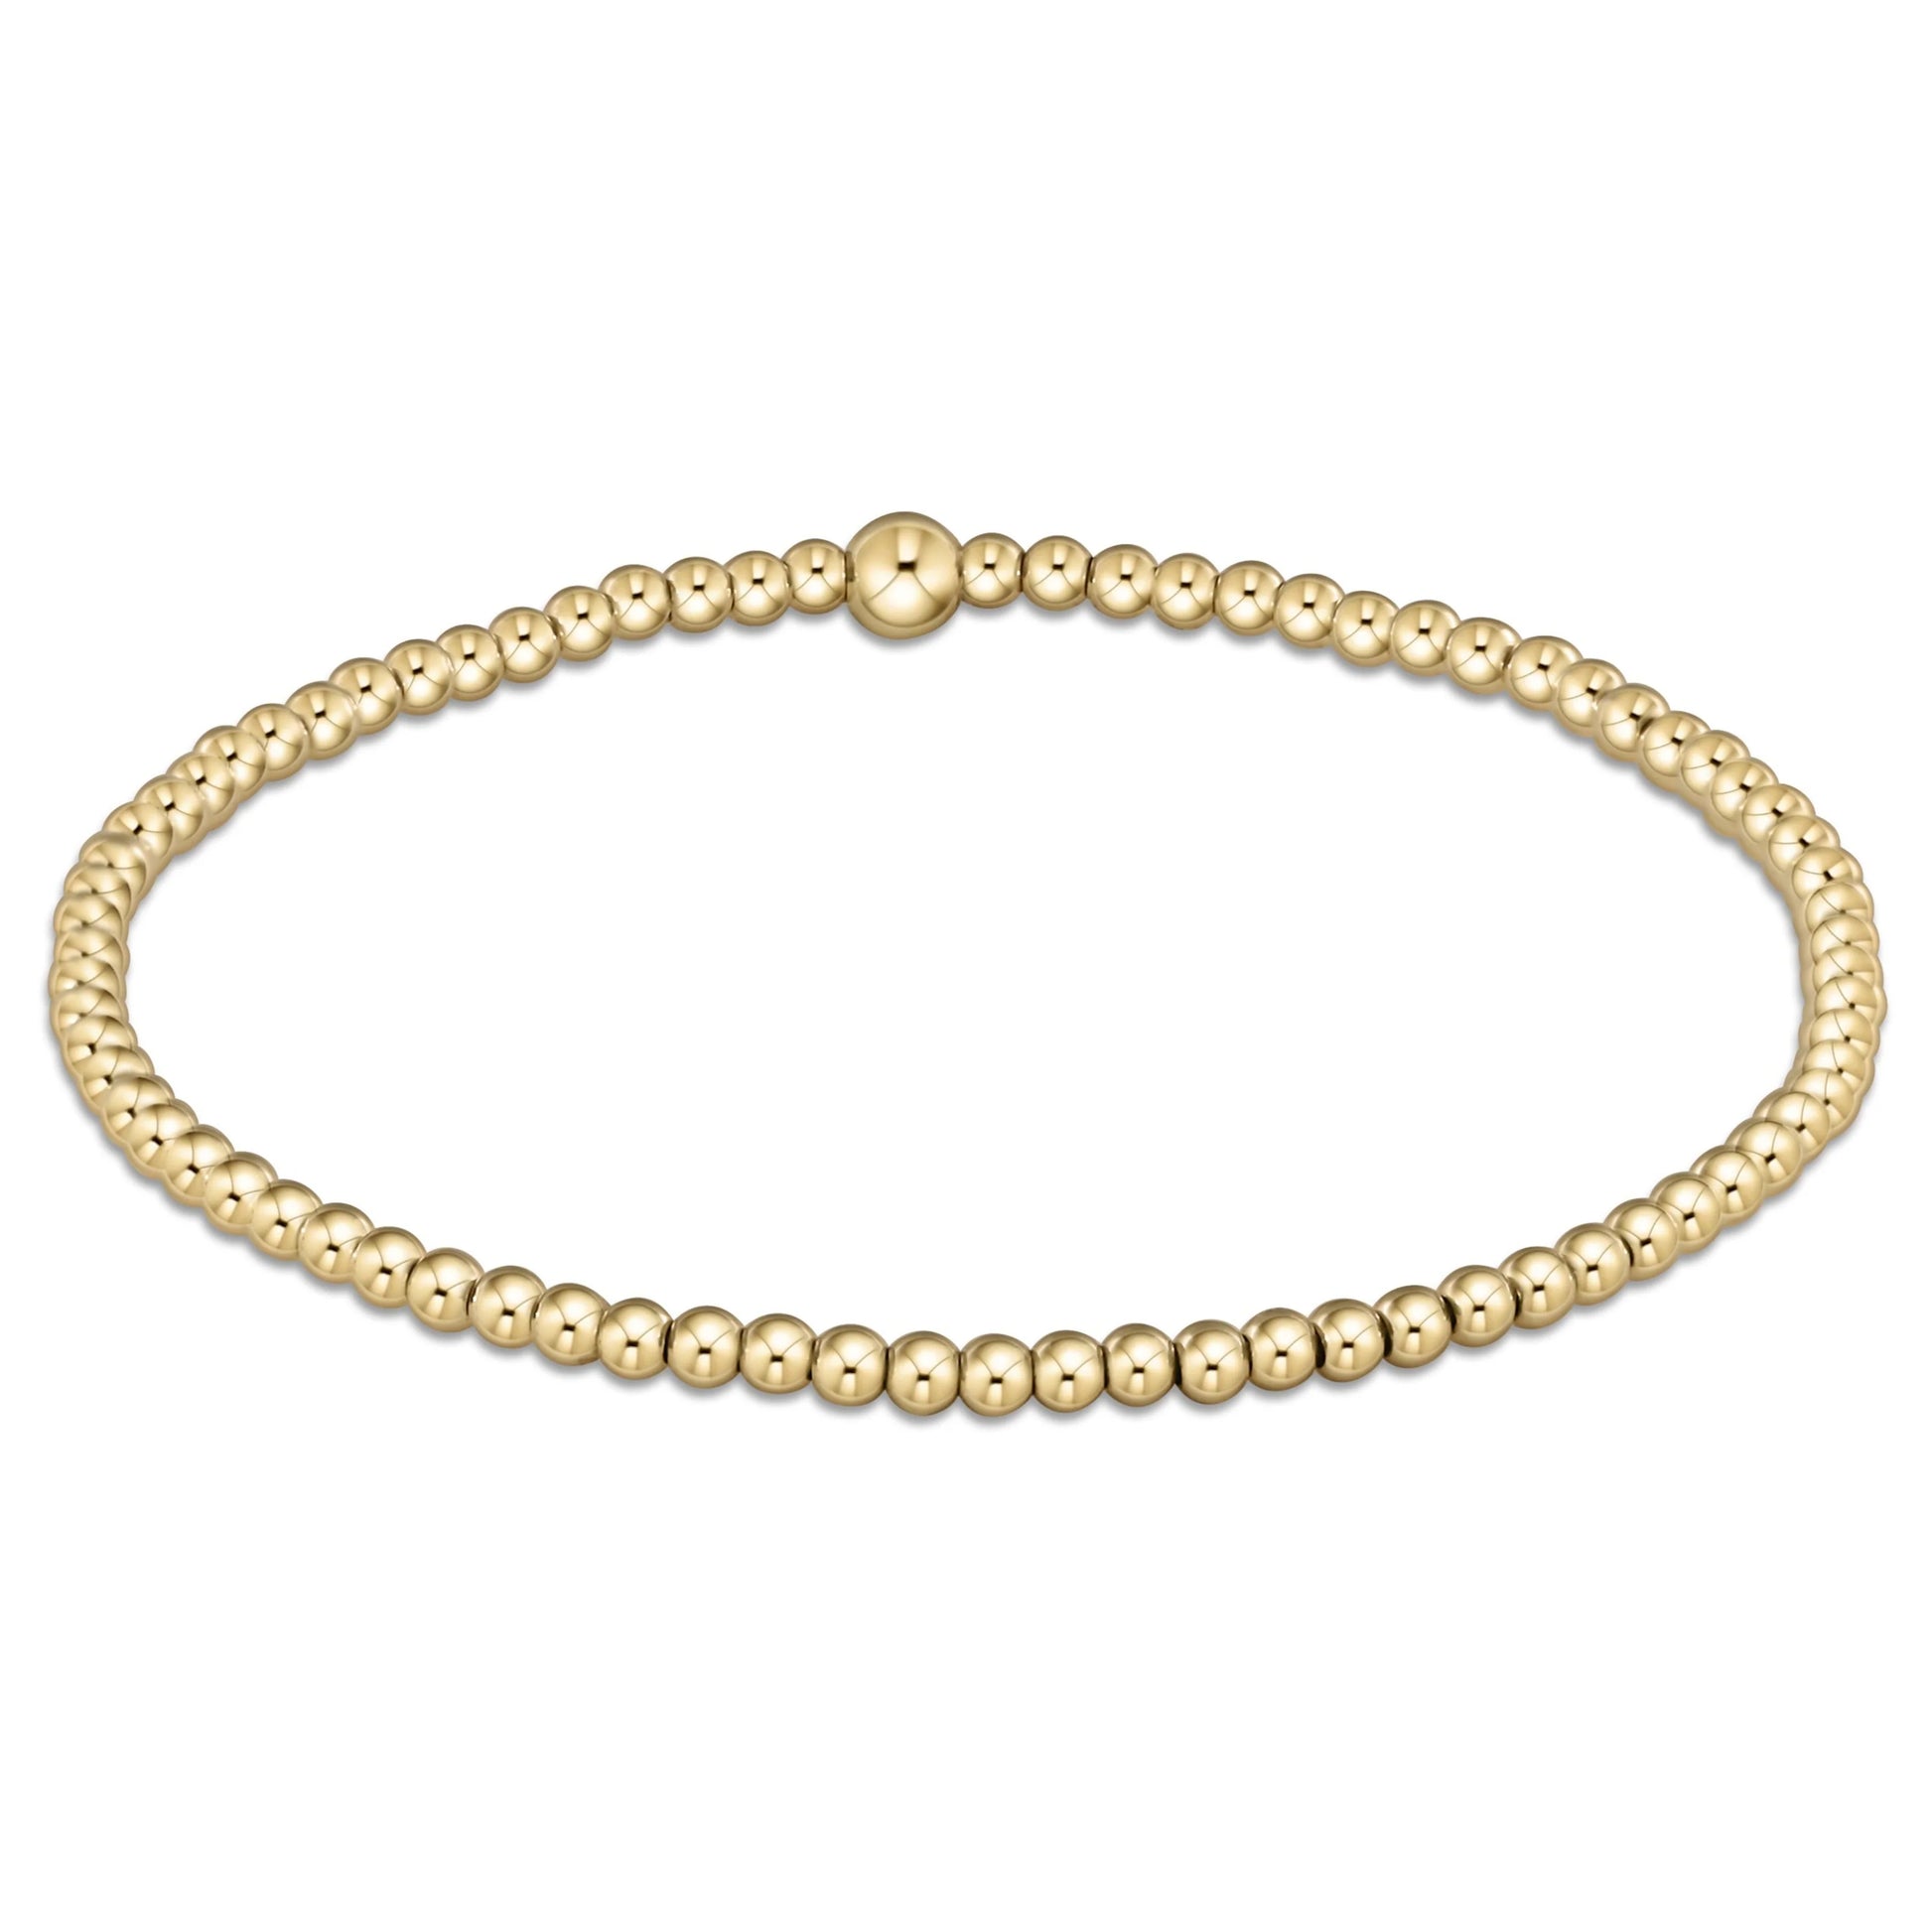 E Newton Classic Gold 2.5mm Bead Bracelet-Bracelets-ENEWTON-The Village Shoppe, Women’s Fashion Boutique, Shop Online and In Store - Located in Muscle Shoals, AL.